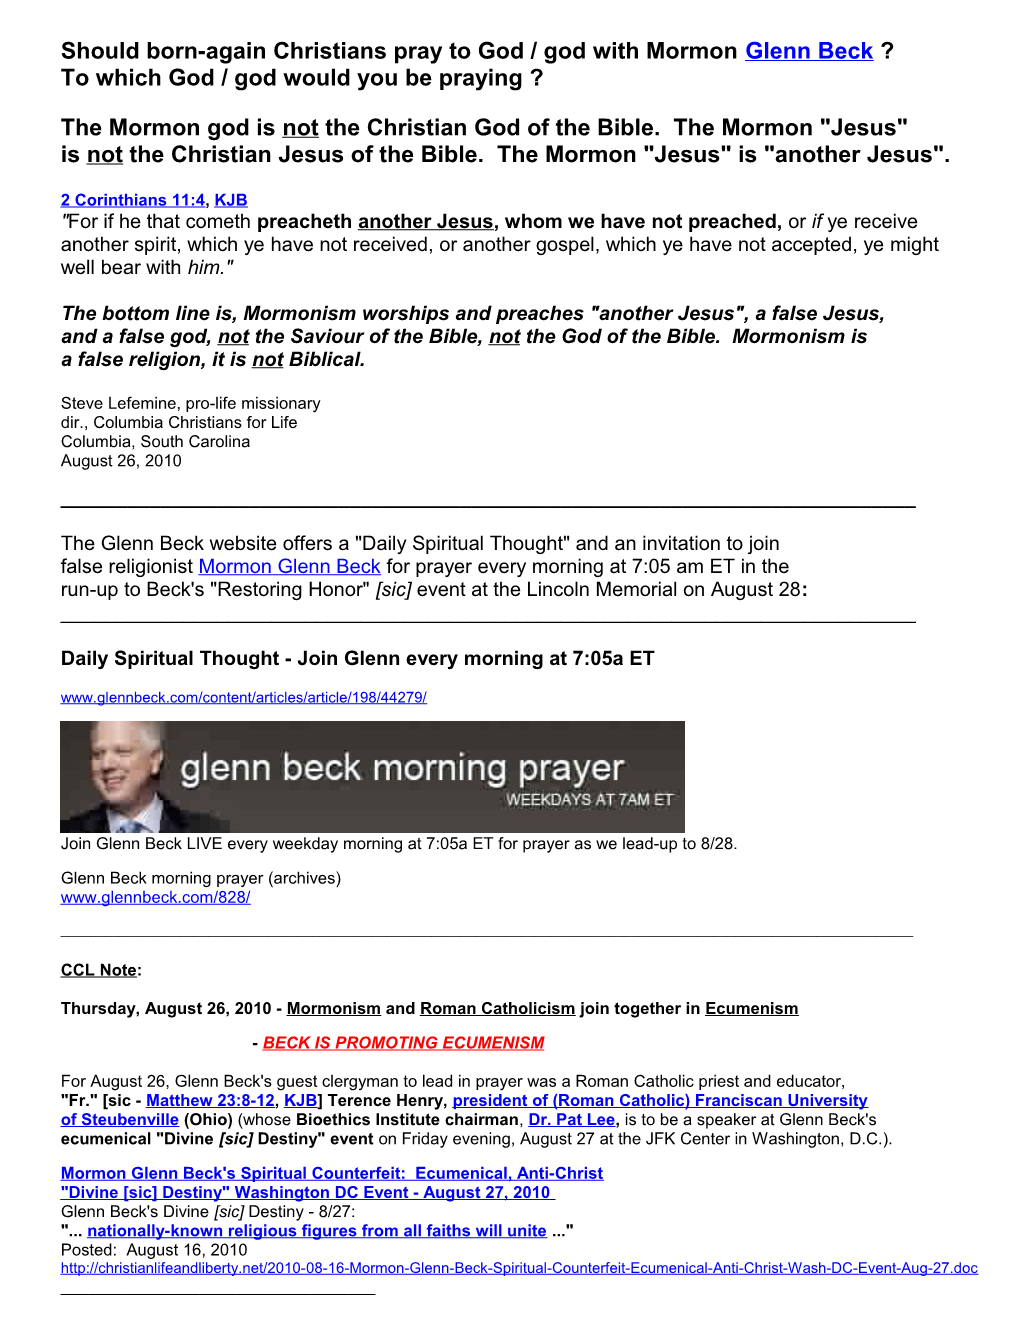 Should Born-Again Christians Pray to God / God with Mormon Glenn Beck